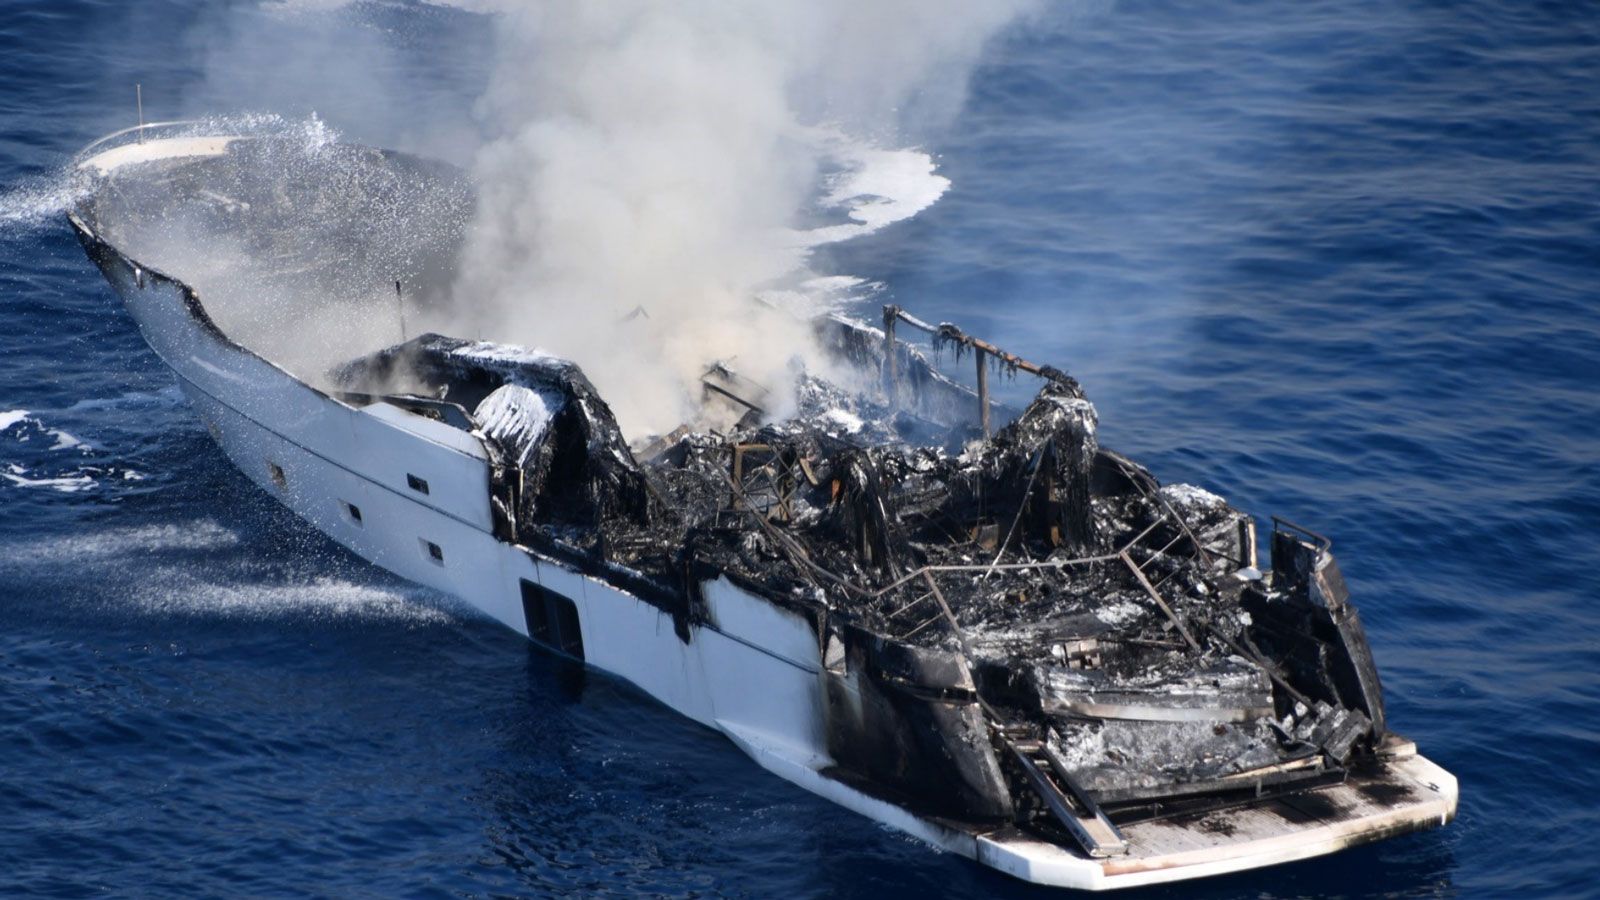 luxury yacht on fire